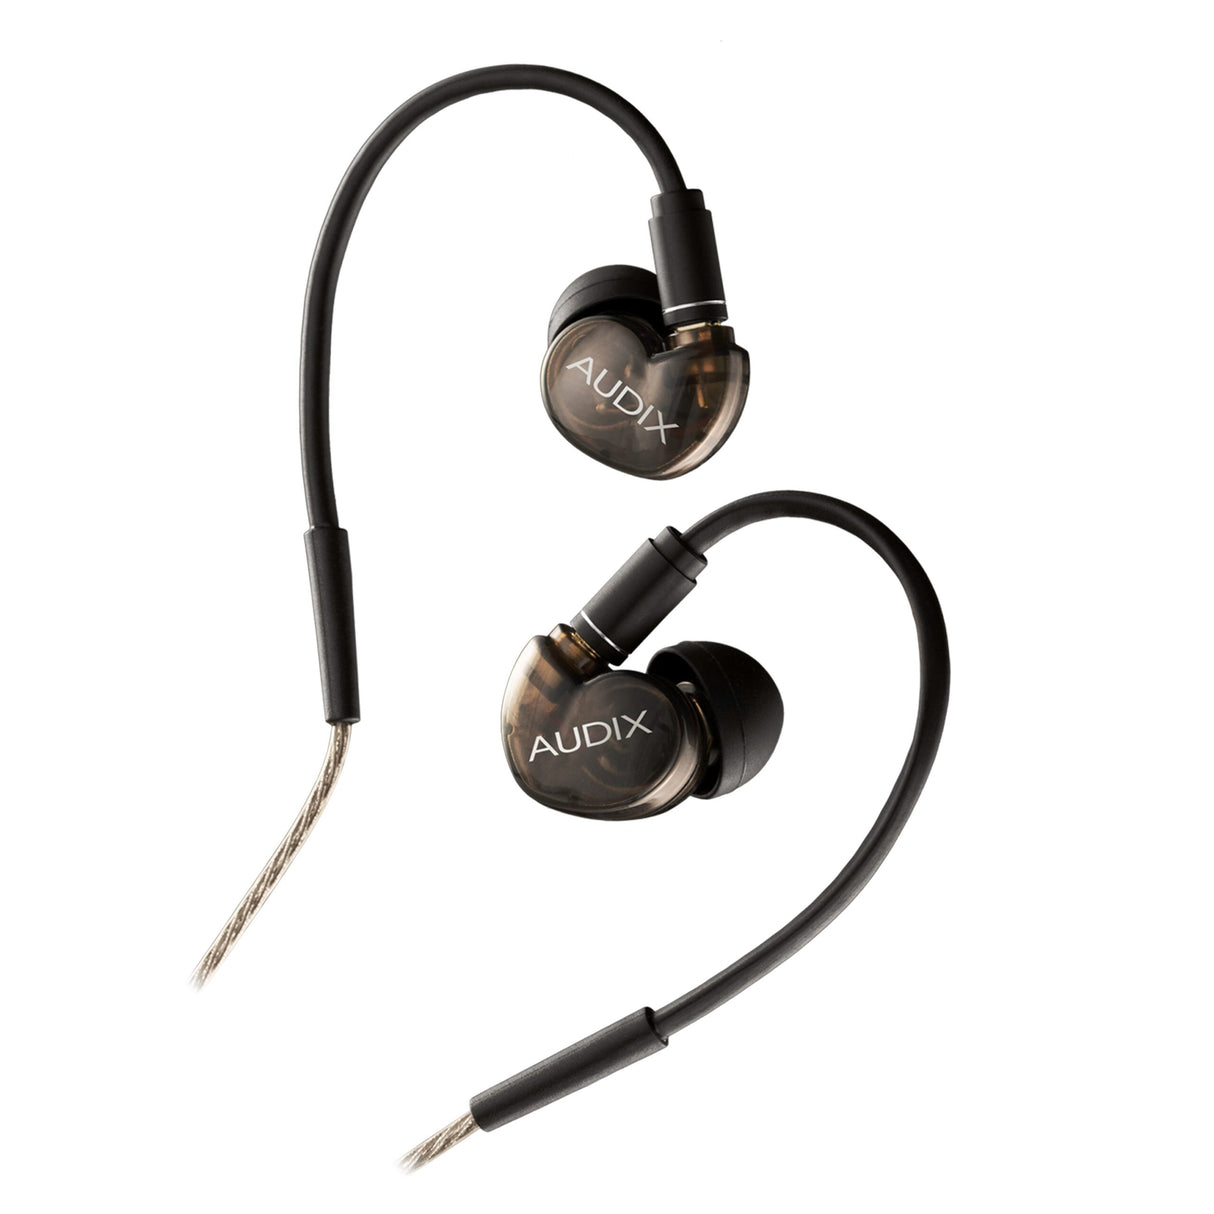 Audix A10 Studio-Quality Performance Earphones